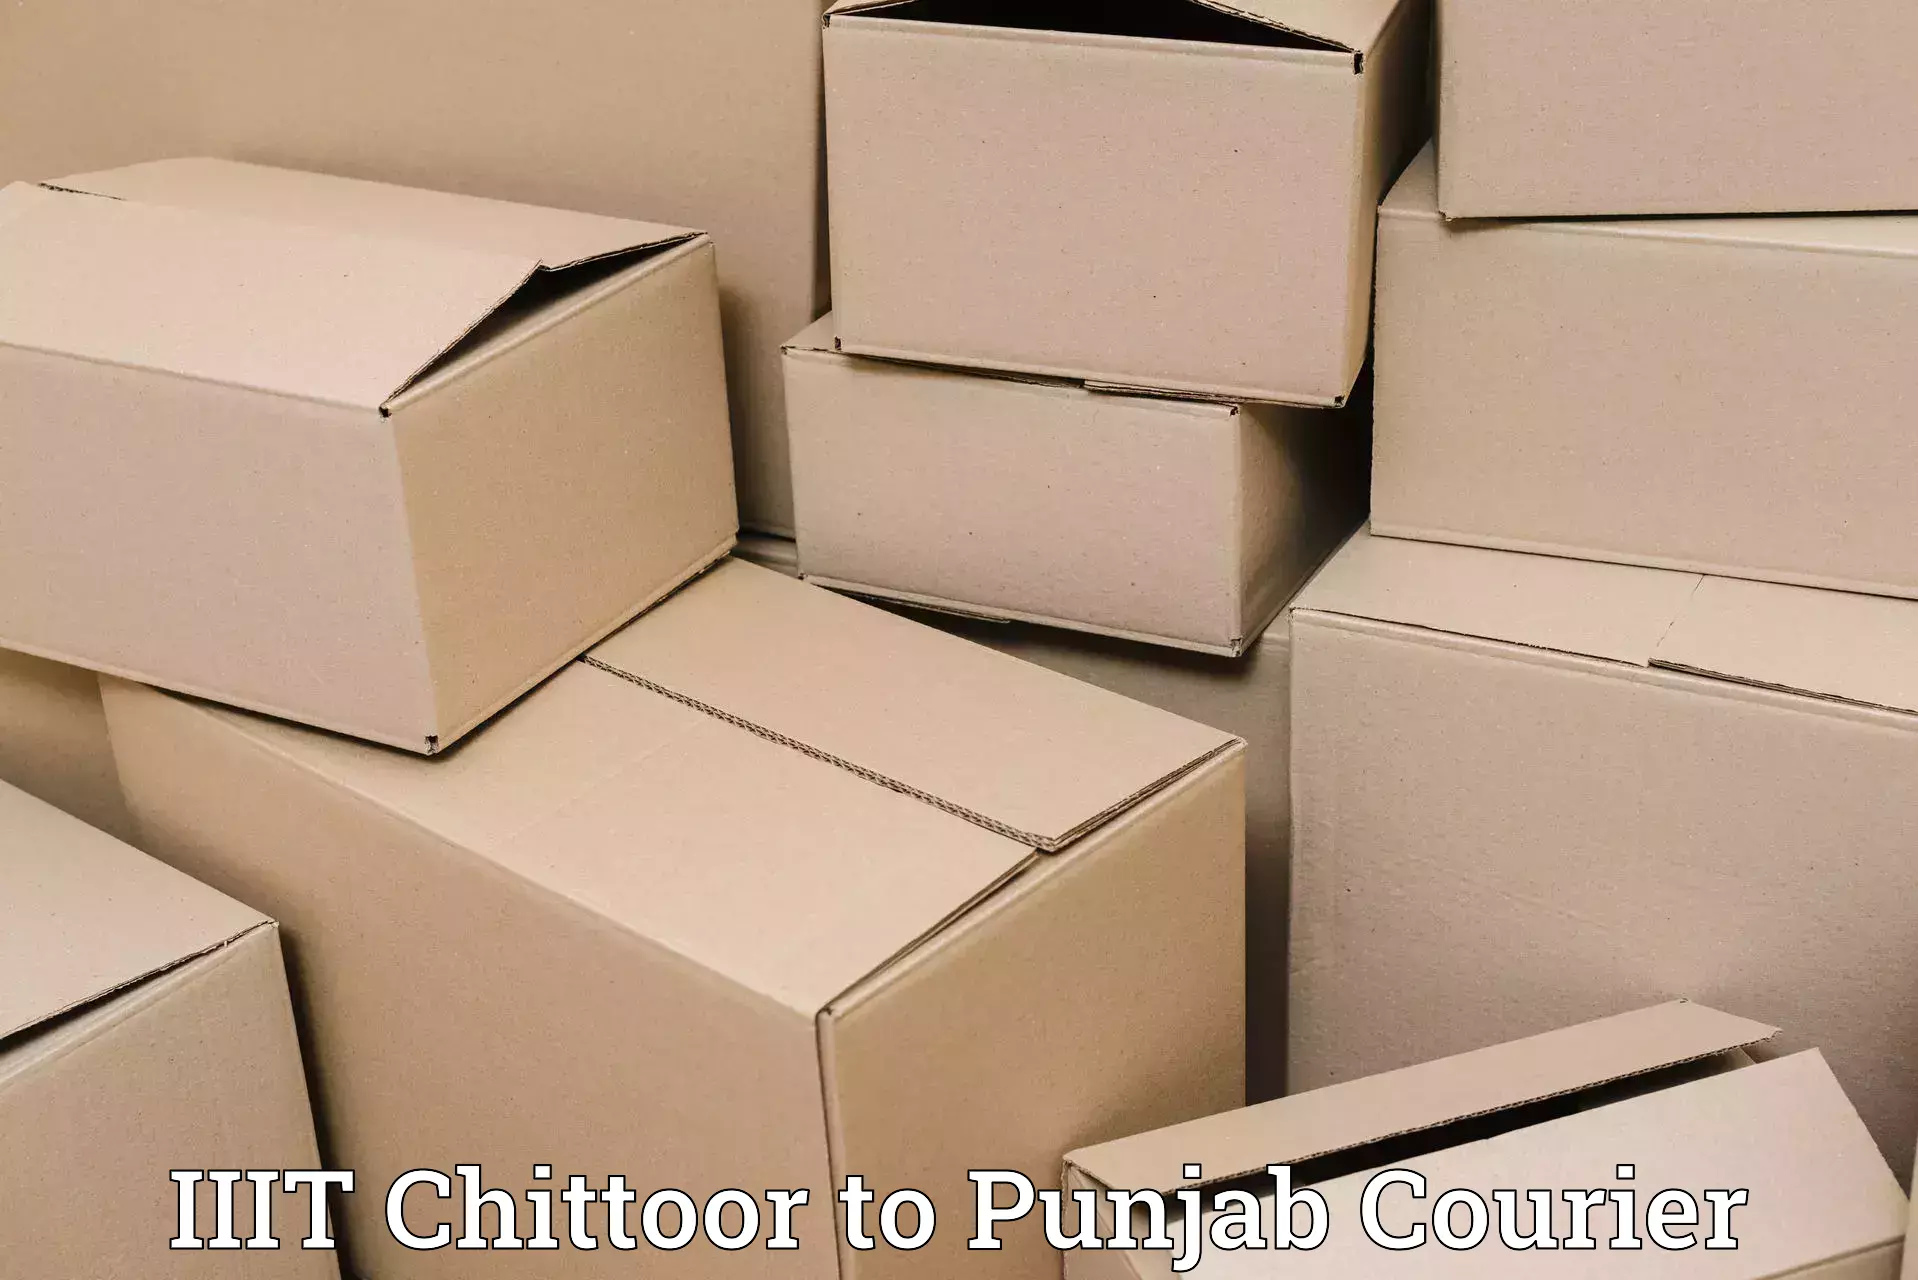 24-hour courier service in IIIT Chittoor to Moga